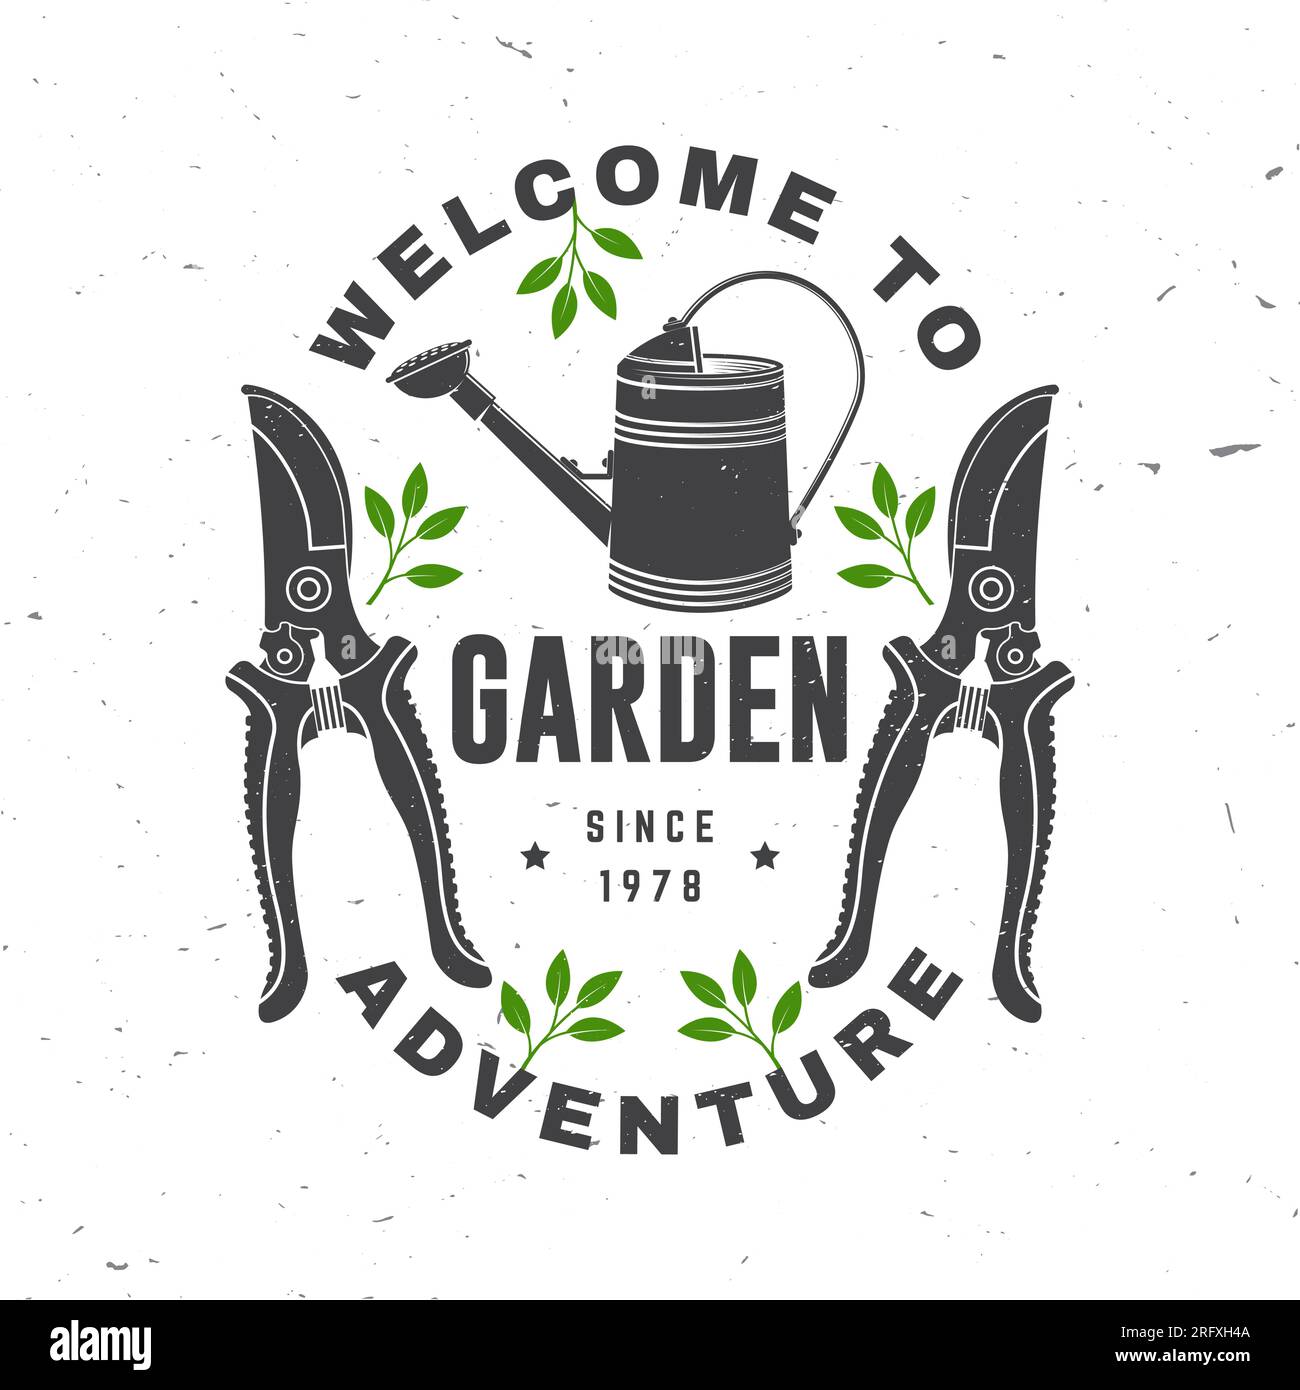 Welcome to garden adventure emblem, label, badge, logo. Vector illustration. For sign, patch, shirt design with hand secateurs, garden pruner Stock Vector